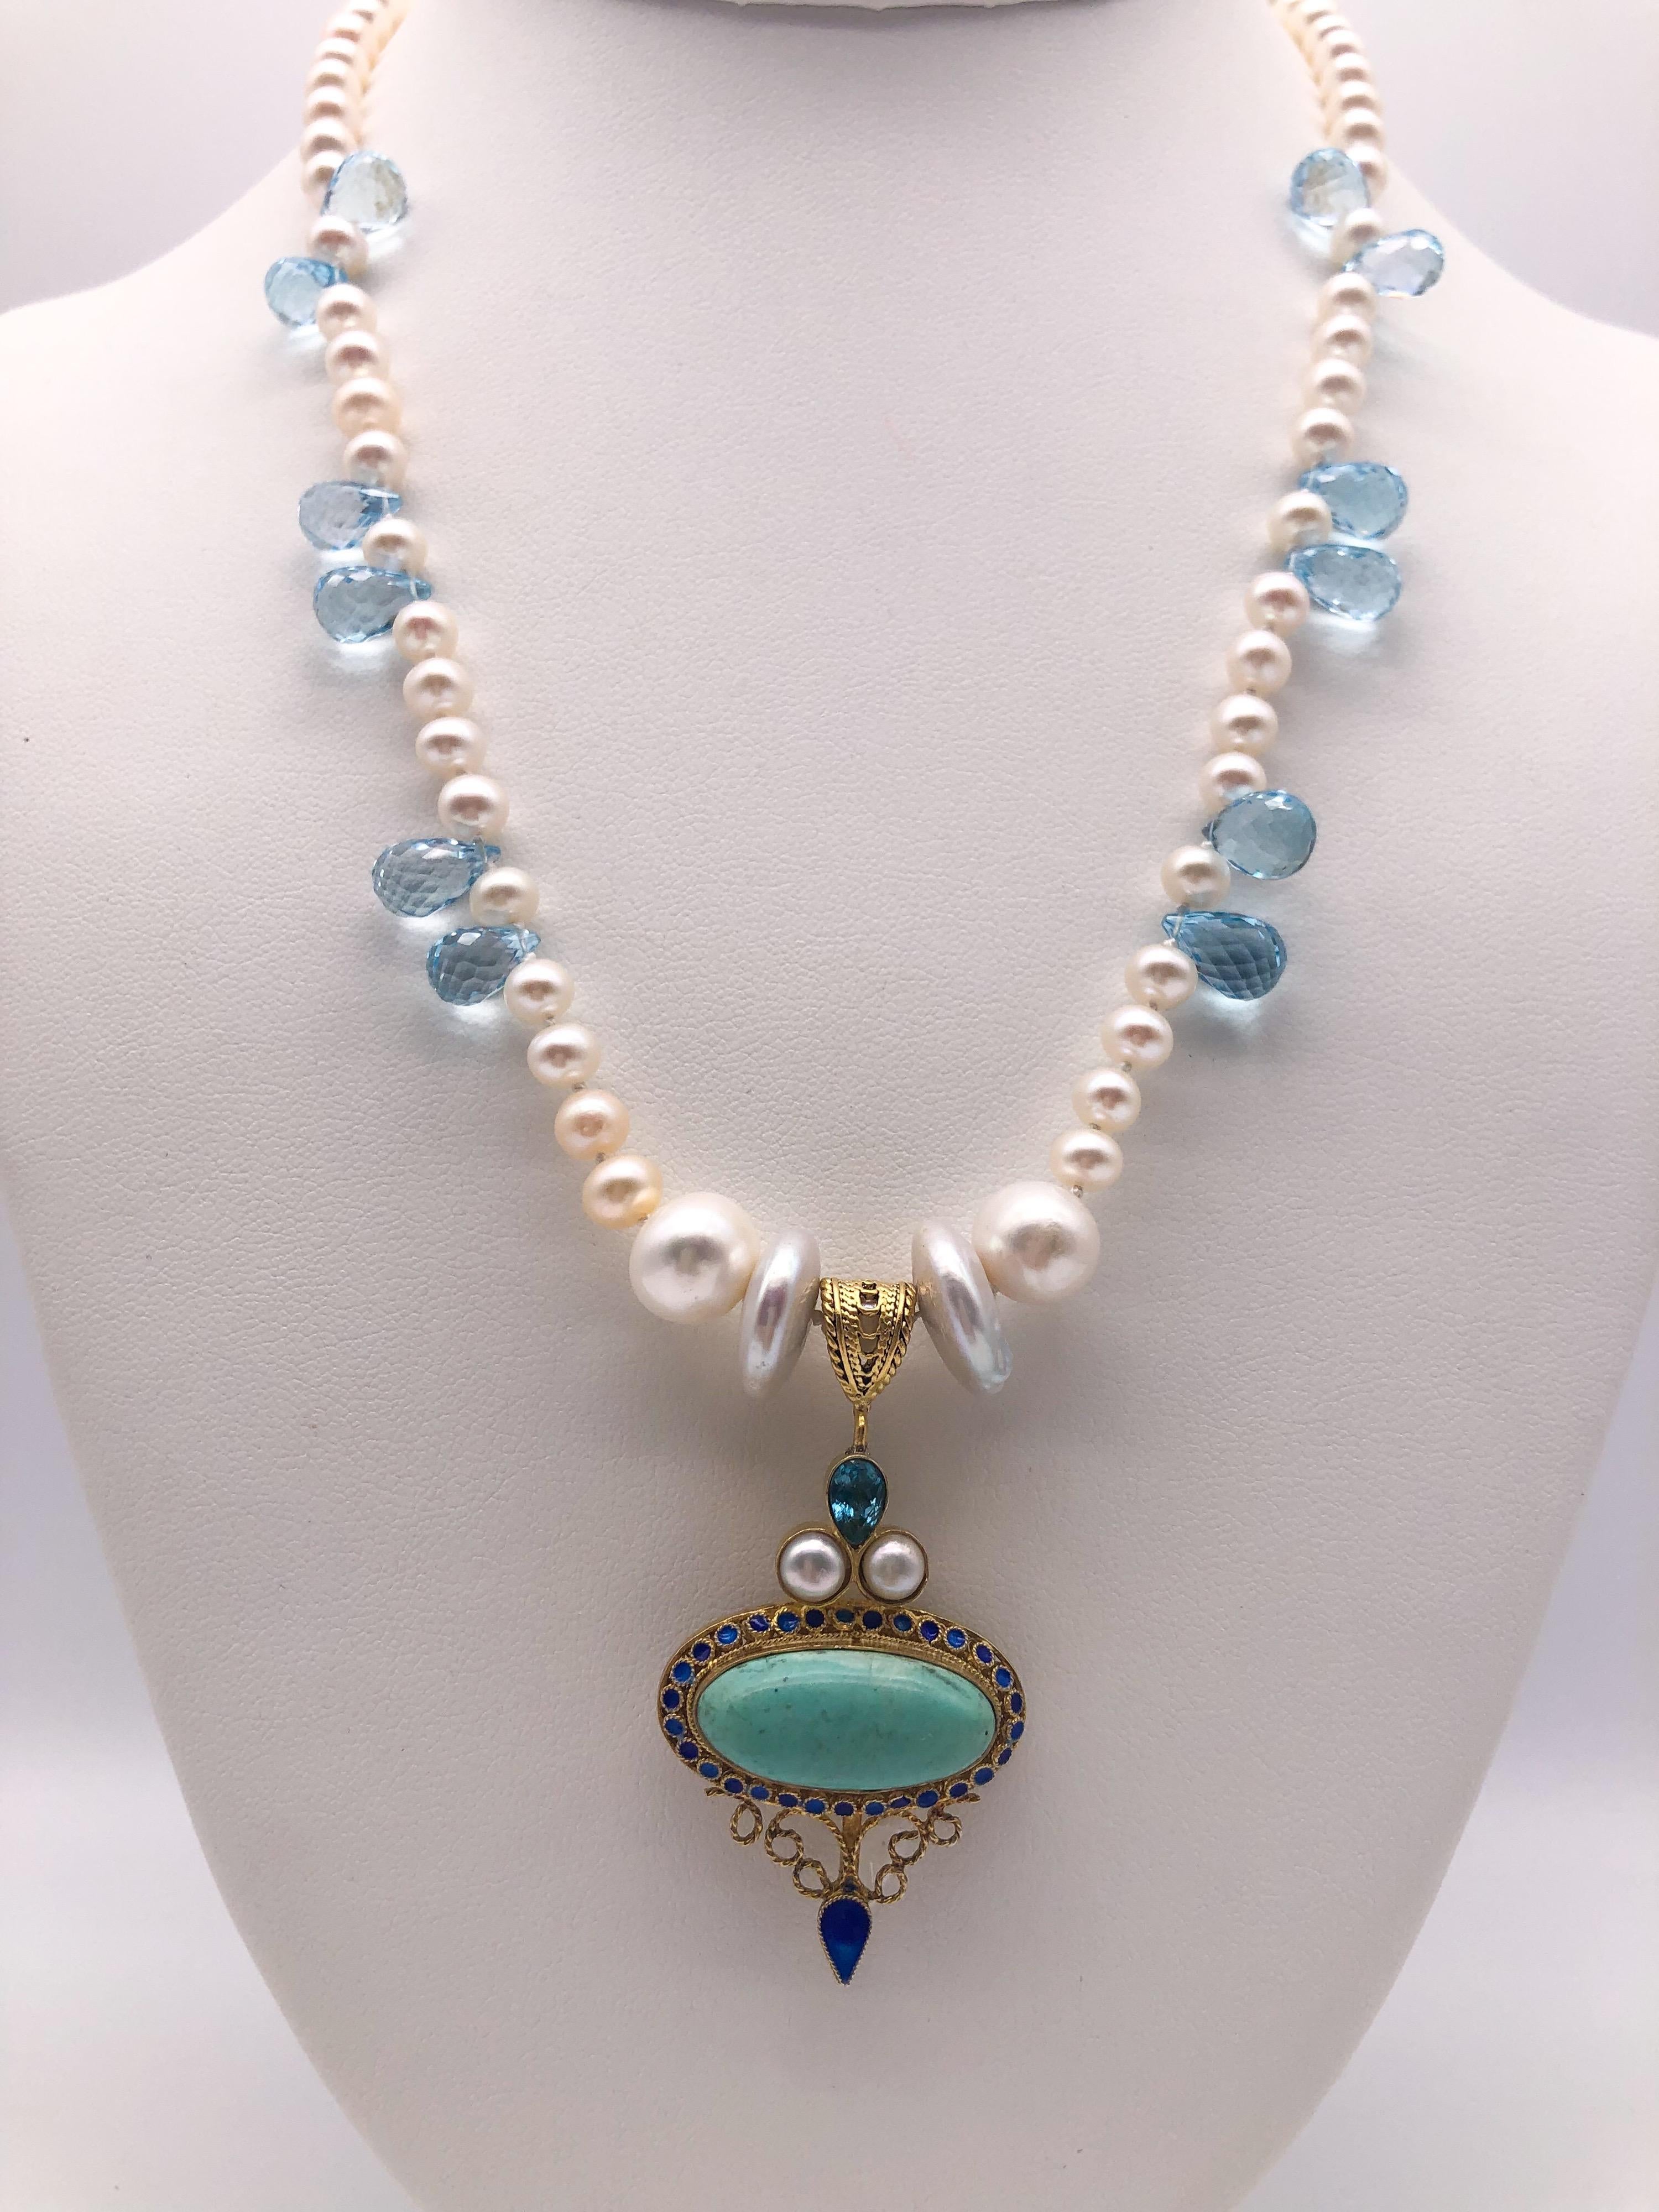 Mixed Cut A.Jeschel  Lustrous Pearls between Blue Topaz teardrops necklace. For Sale